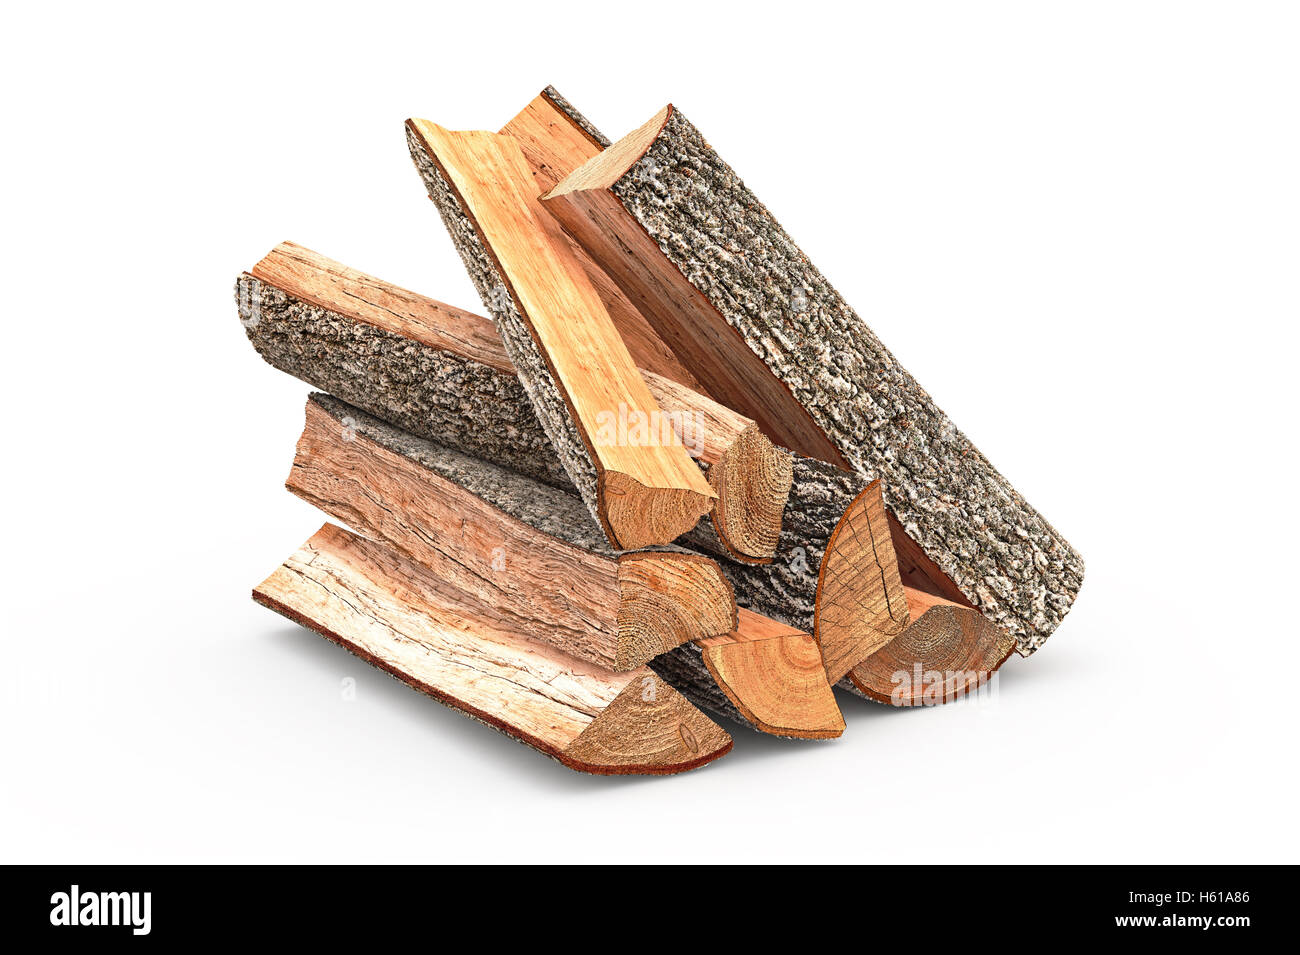 Firewood stack chopped Stock Photo